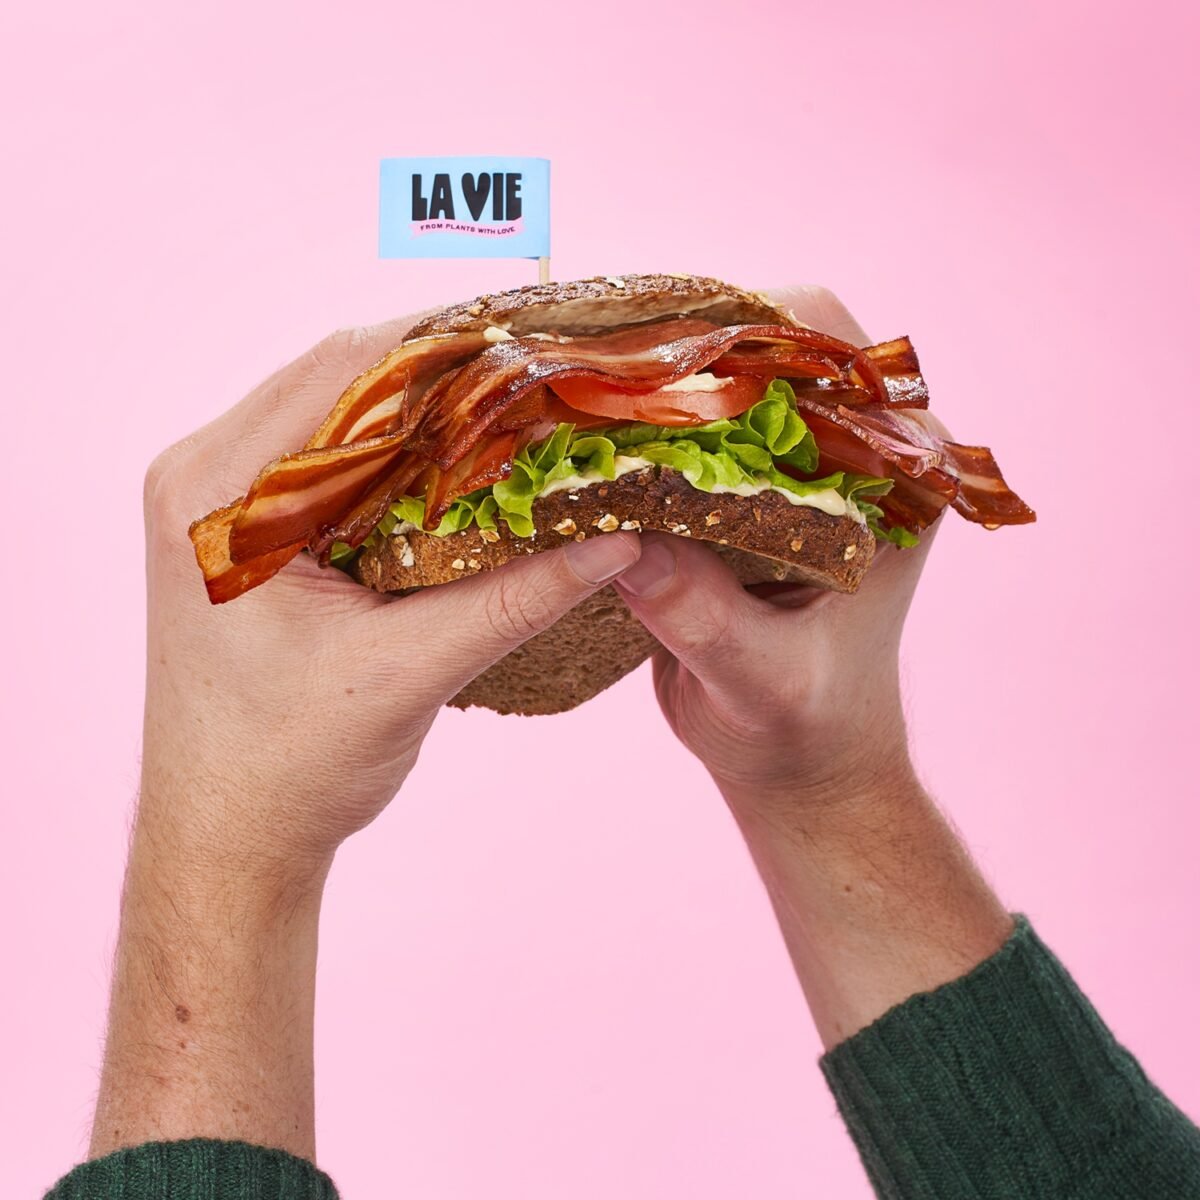 A vegan bacon sandwich from plant-based meat brand La Vie